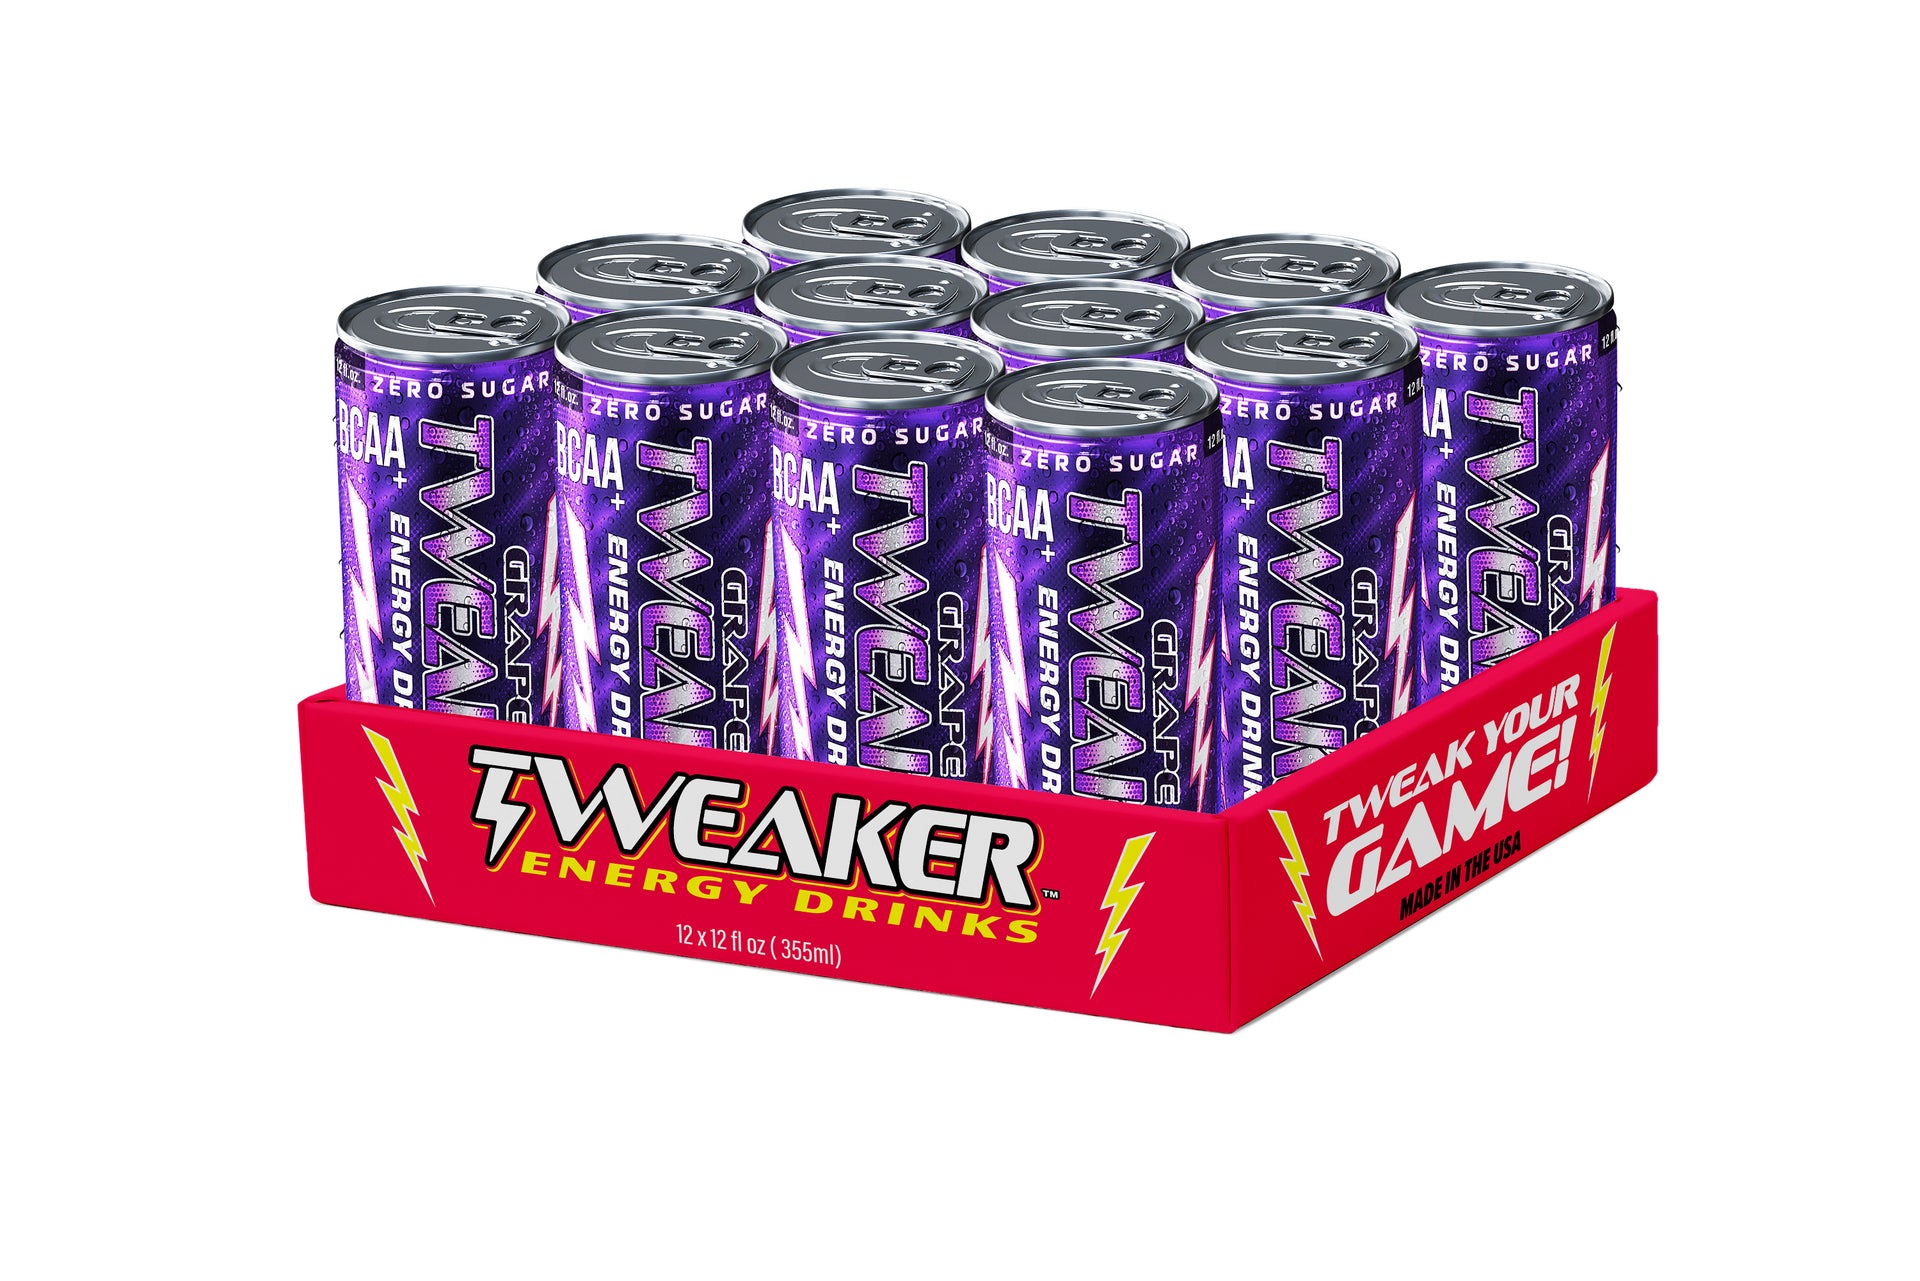 Image shows 12 pack case of Tweaker Energy Drink, grape flavor